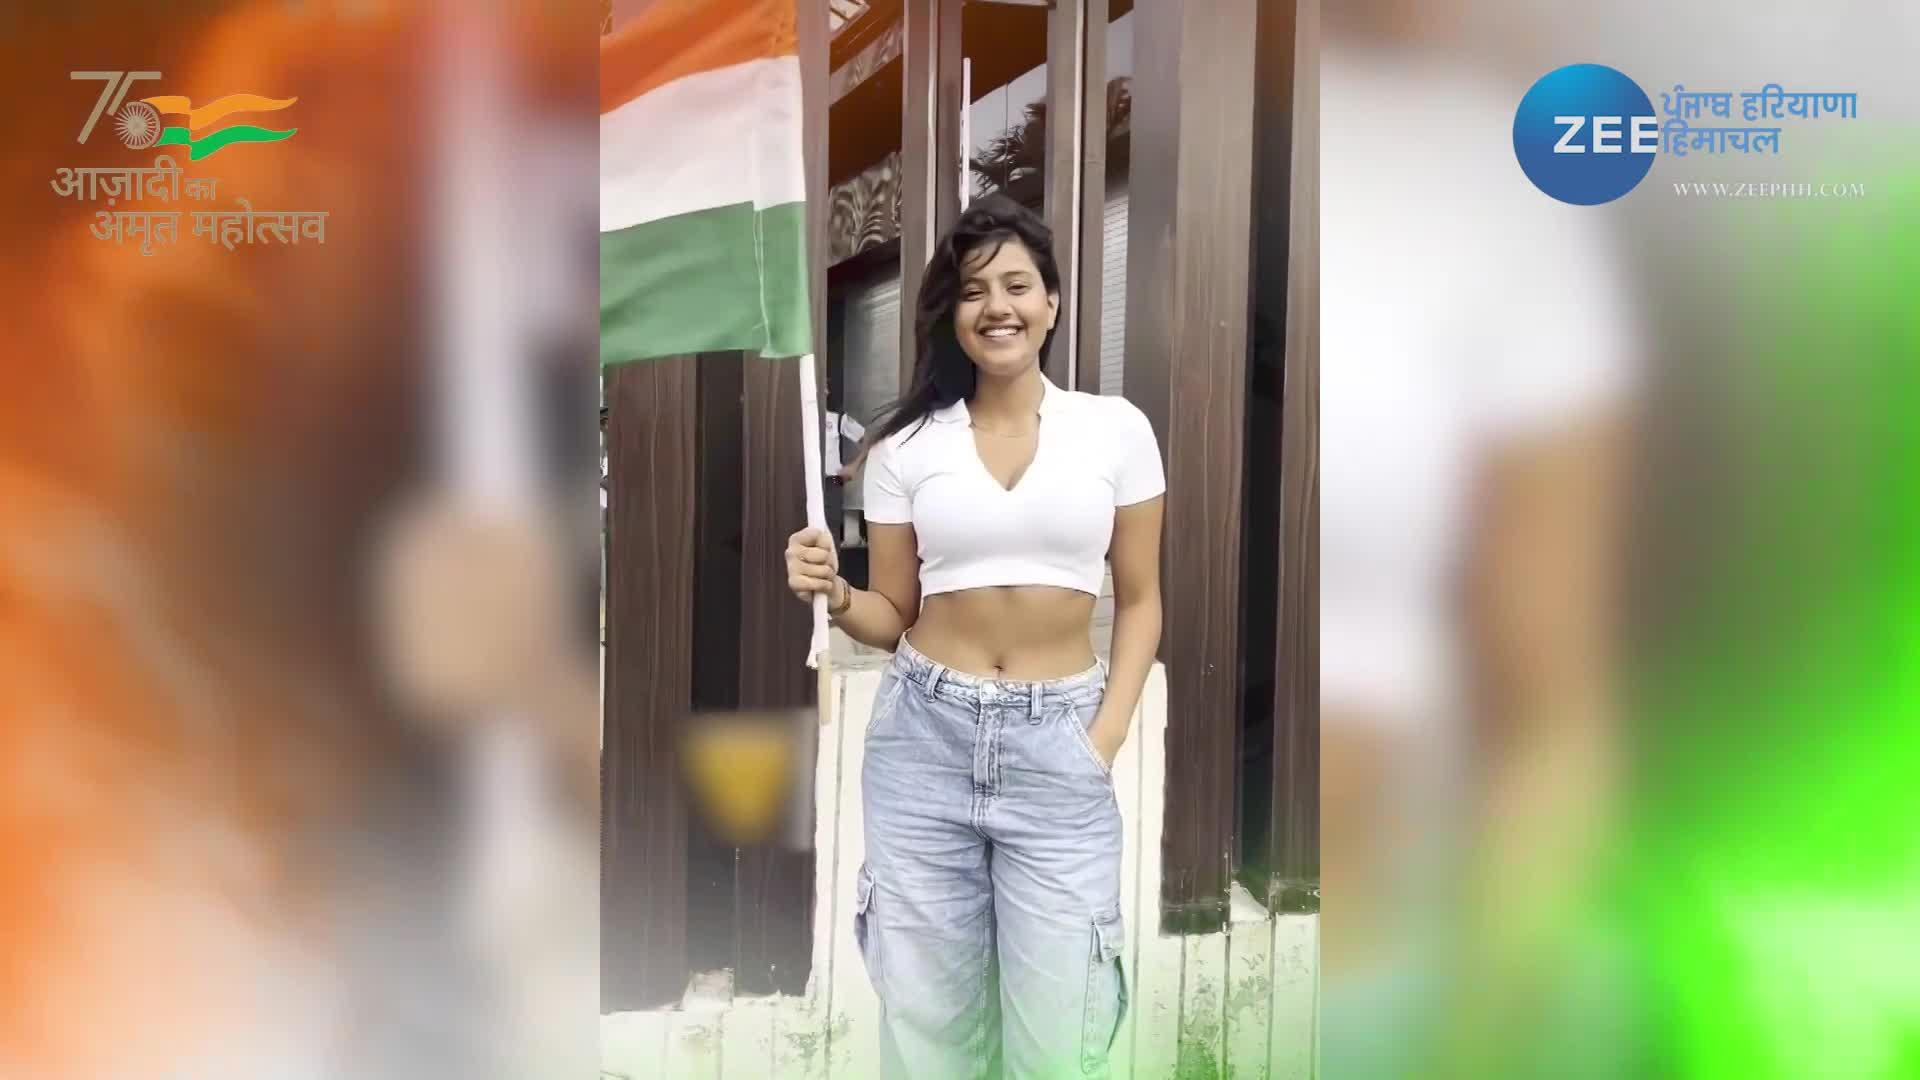 Anjali Sex Videos Hd - Anjali Arora new video viral with flag after mms watch full video plrh |  anjali arora video: à¤…à¤‚à¤œà¤²à¤¿ à¤…à¤°à¥‹à¤¡à¤¼à¤¾ à¤•à¤¾ à¤à¤• à¤”à¤° à¤µà¥€à¤¡à¤¿à¤¯à¥‹ à¤¹à¥‹ à¤°à¤¹à¤¾ à¤µà¤¾à¤¯à¤°à¤², à¤¯à¥‚à¤œà¤°à¥à¤¸ à¤•à¤°  à¤œà¤®à¤•à¤° à¤Ÿà¥à¤°à¥‹